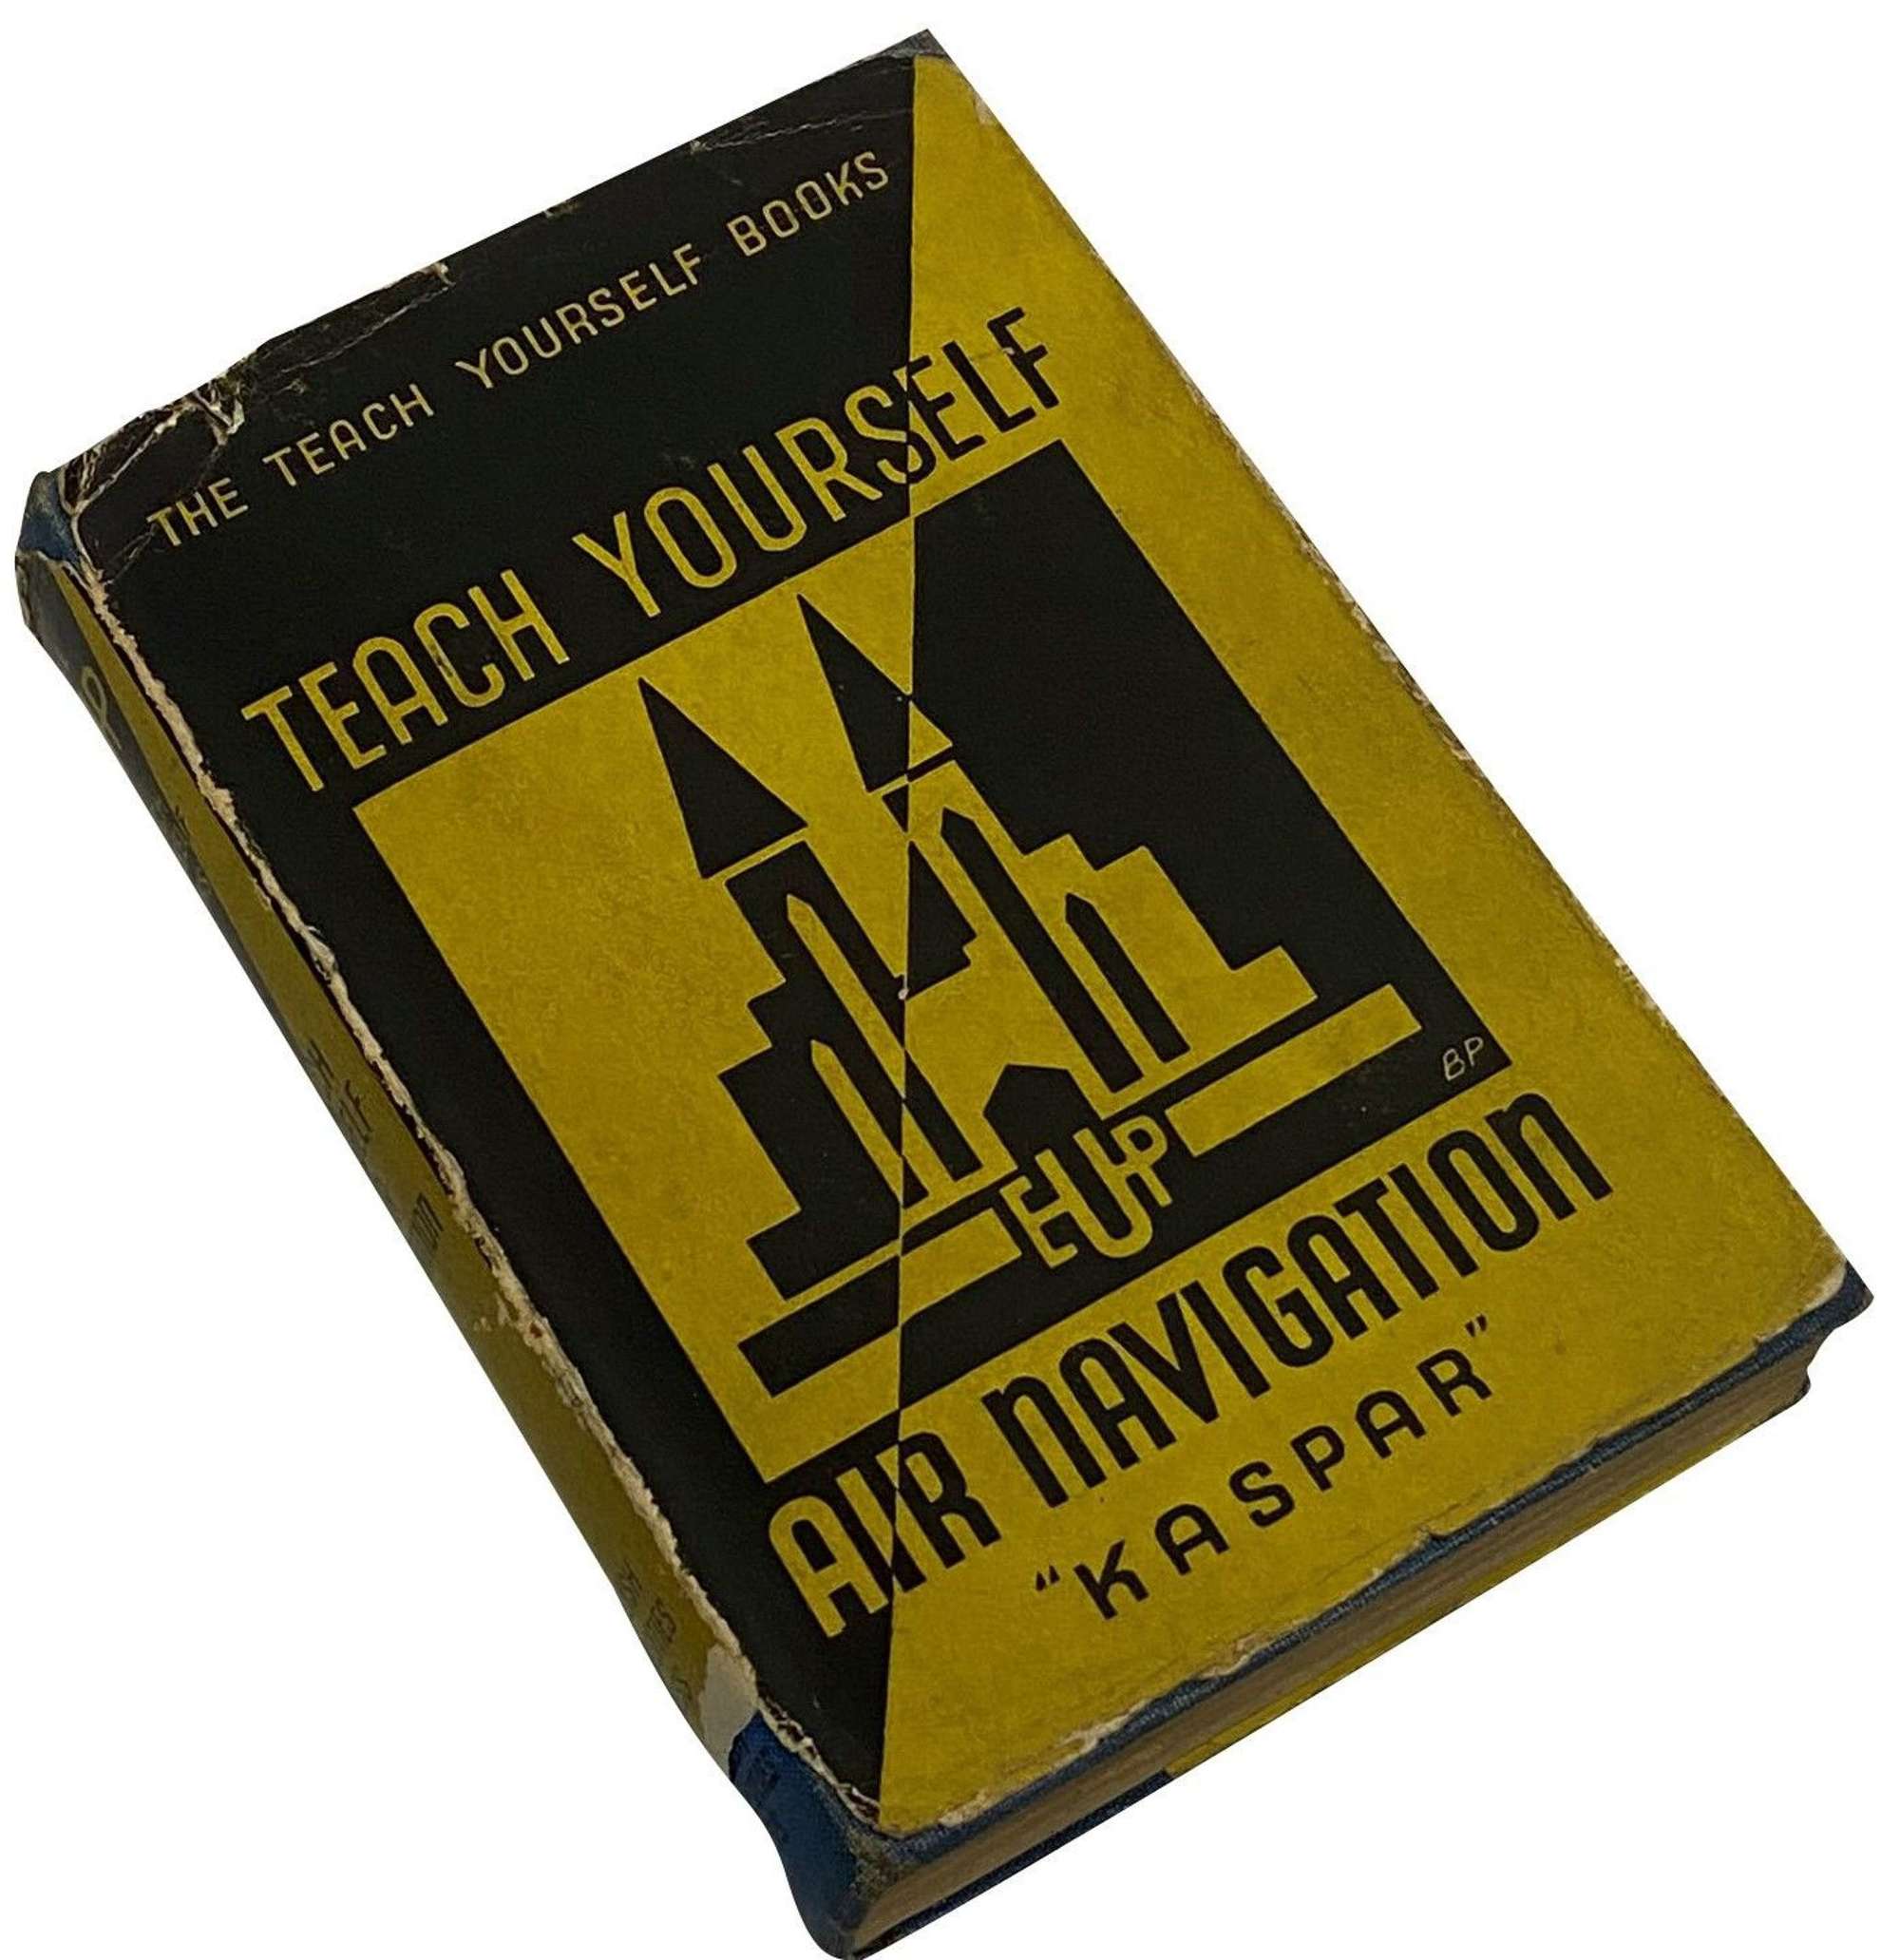 Original 1942 Dated Book 'Teach Yourself Navigation' - First Edition